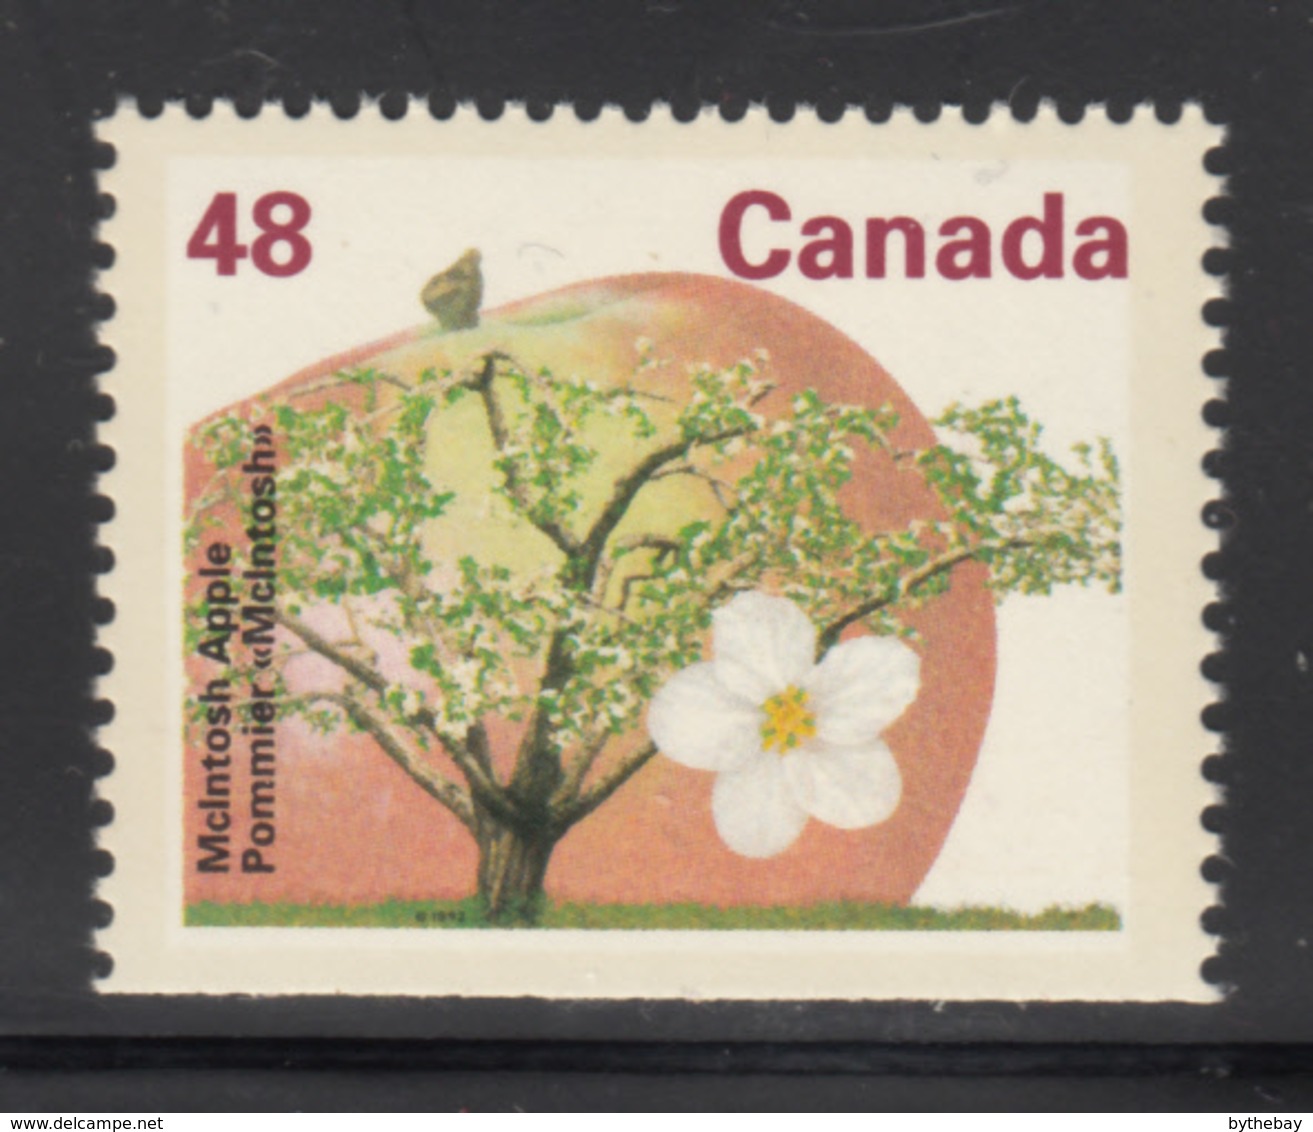 Canada 1991 MNH Sc #1363a 48c McIntosh Apple Booklet Single Ex BK142 - Single Stamps